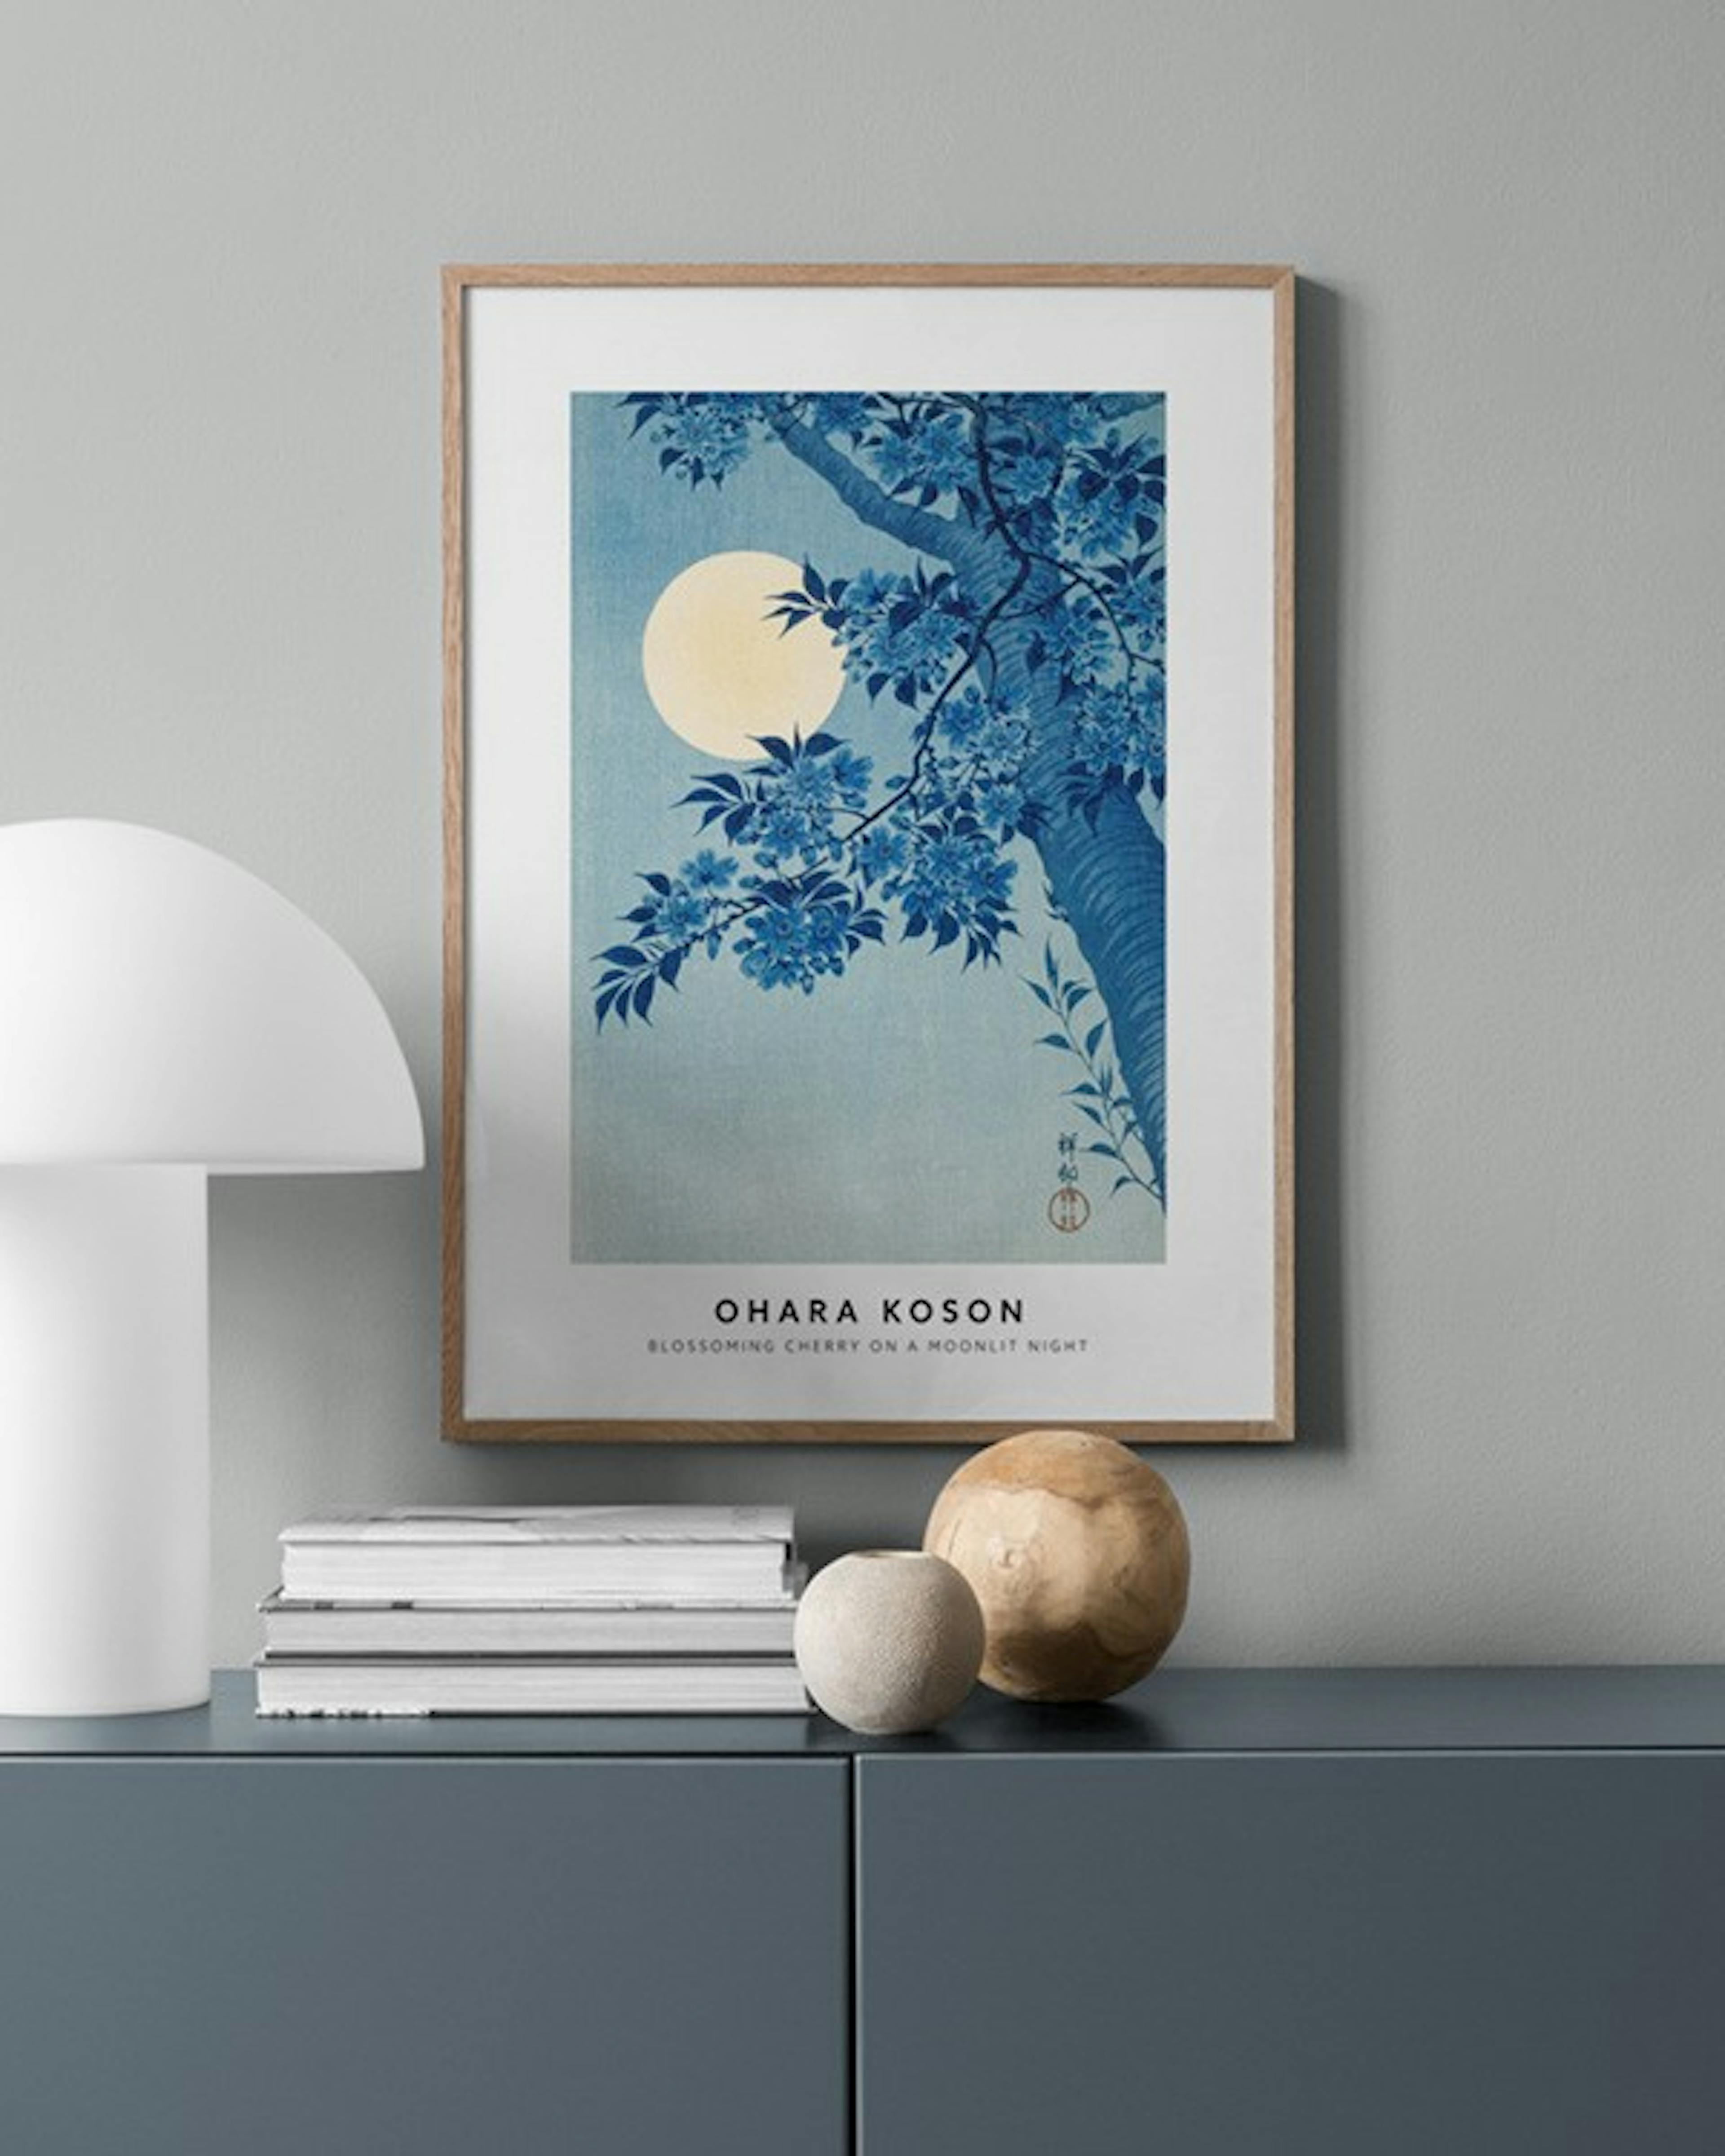 Ohara Koson - Blossoming Cherry on a Moonlit Night Print